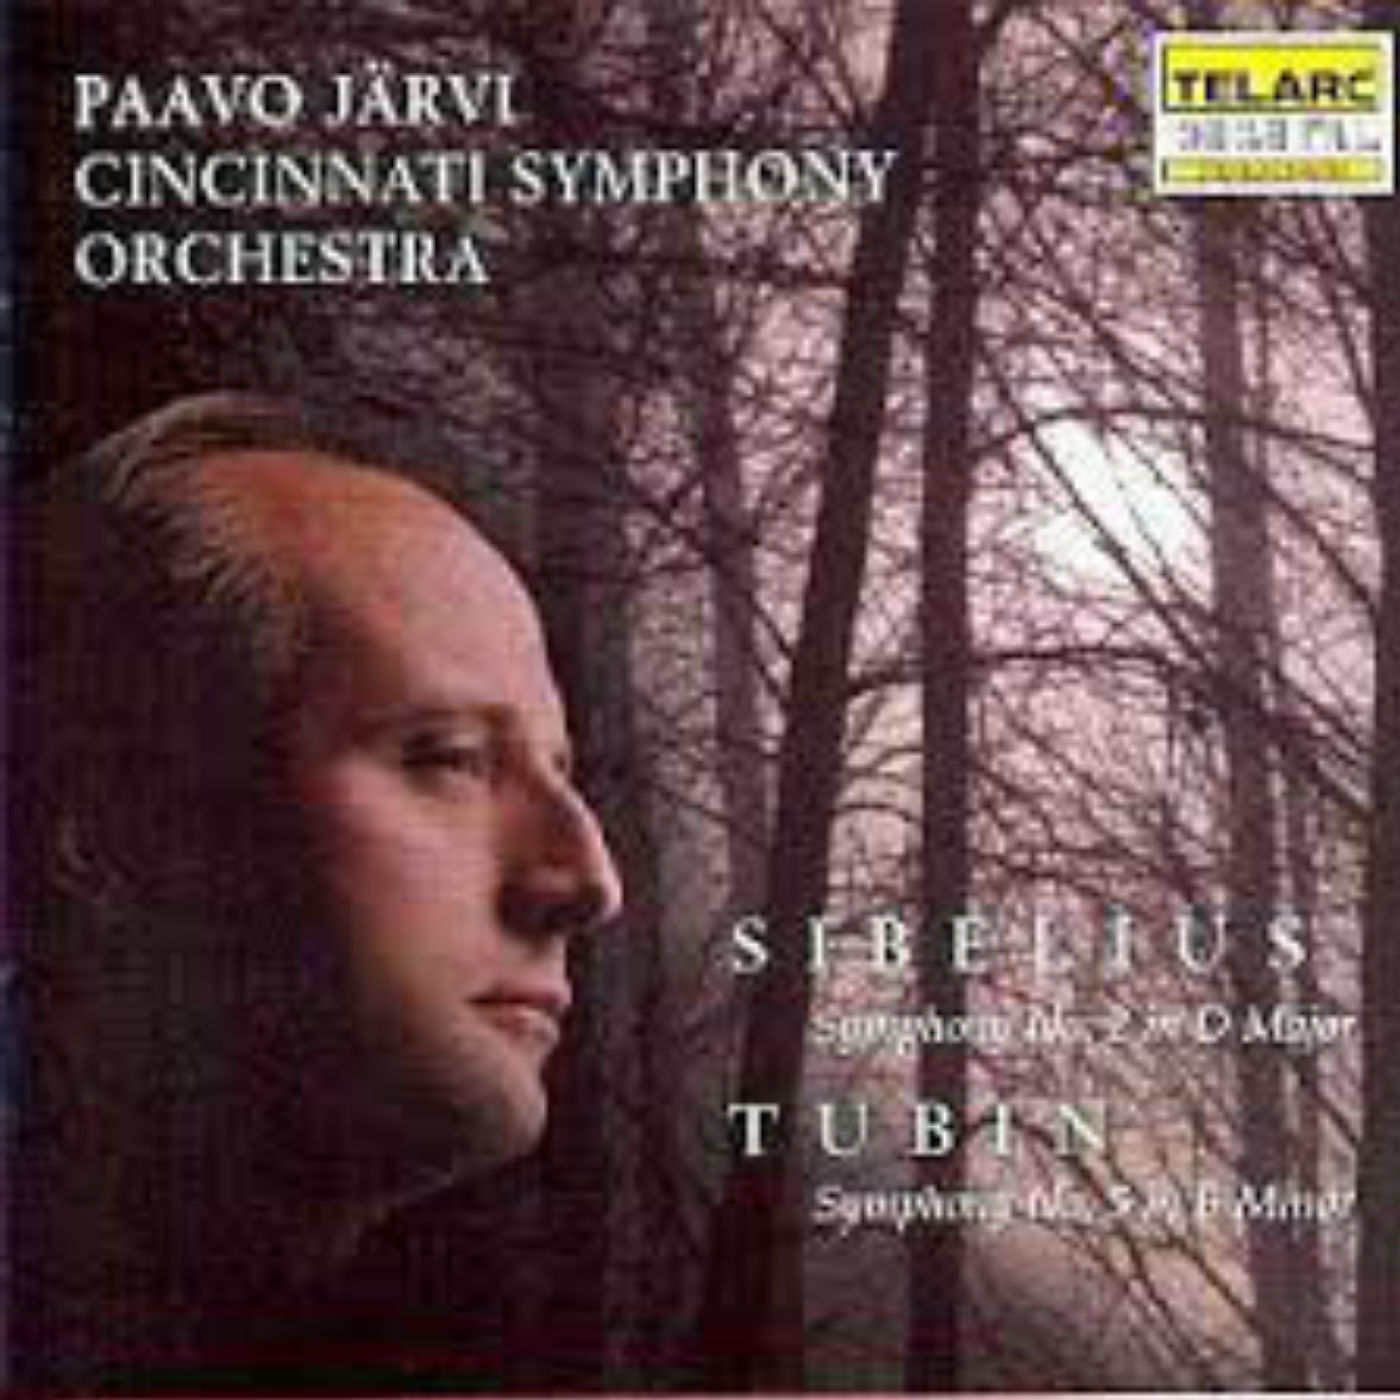 SIBELIUS: SYMPHONY NO. 2; TUBIN: SYMPHONY NO. 5 - Paavo Jarvi, Cincinnati Symphony Orchestra